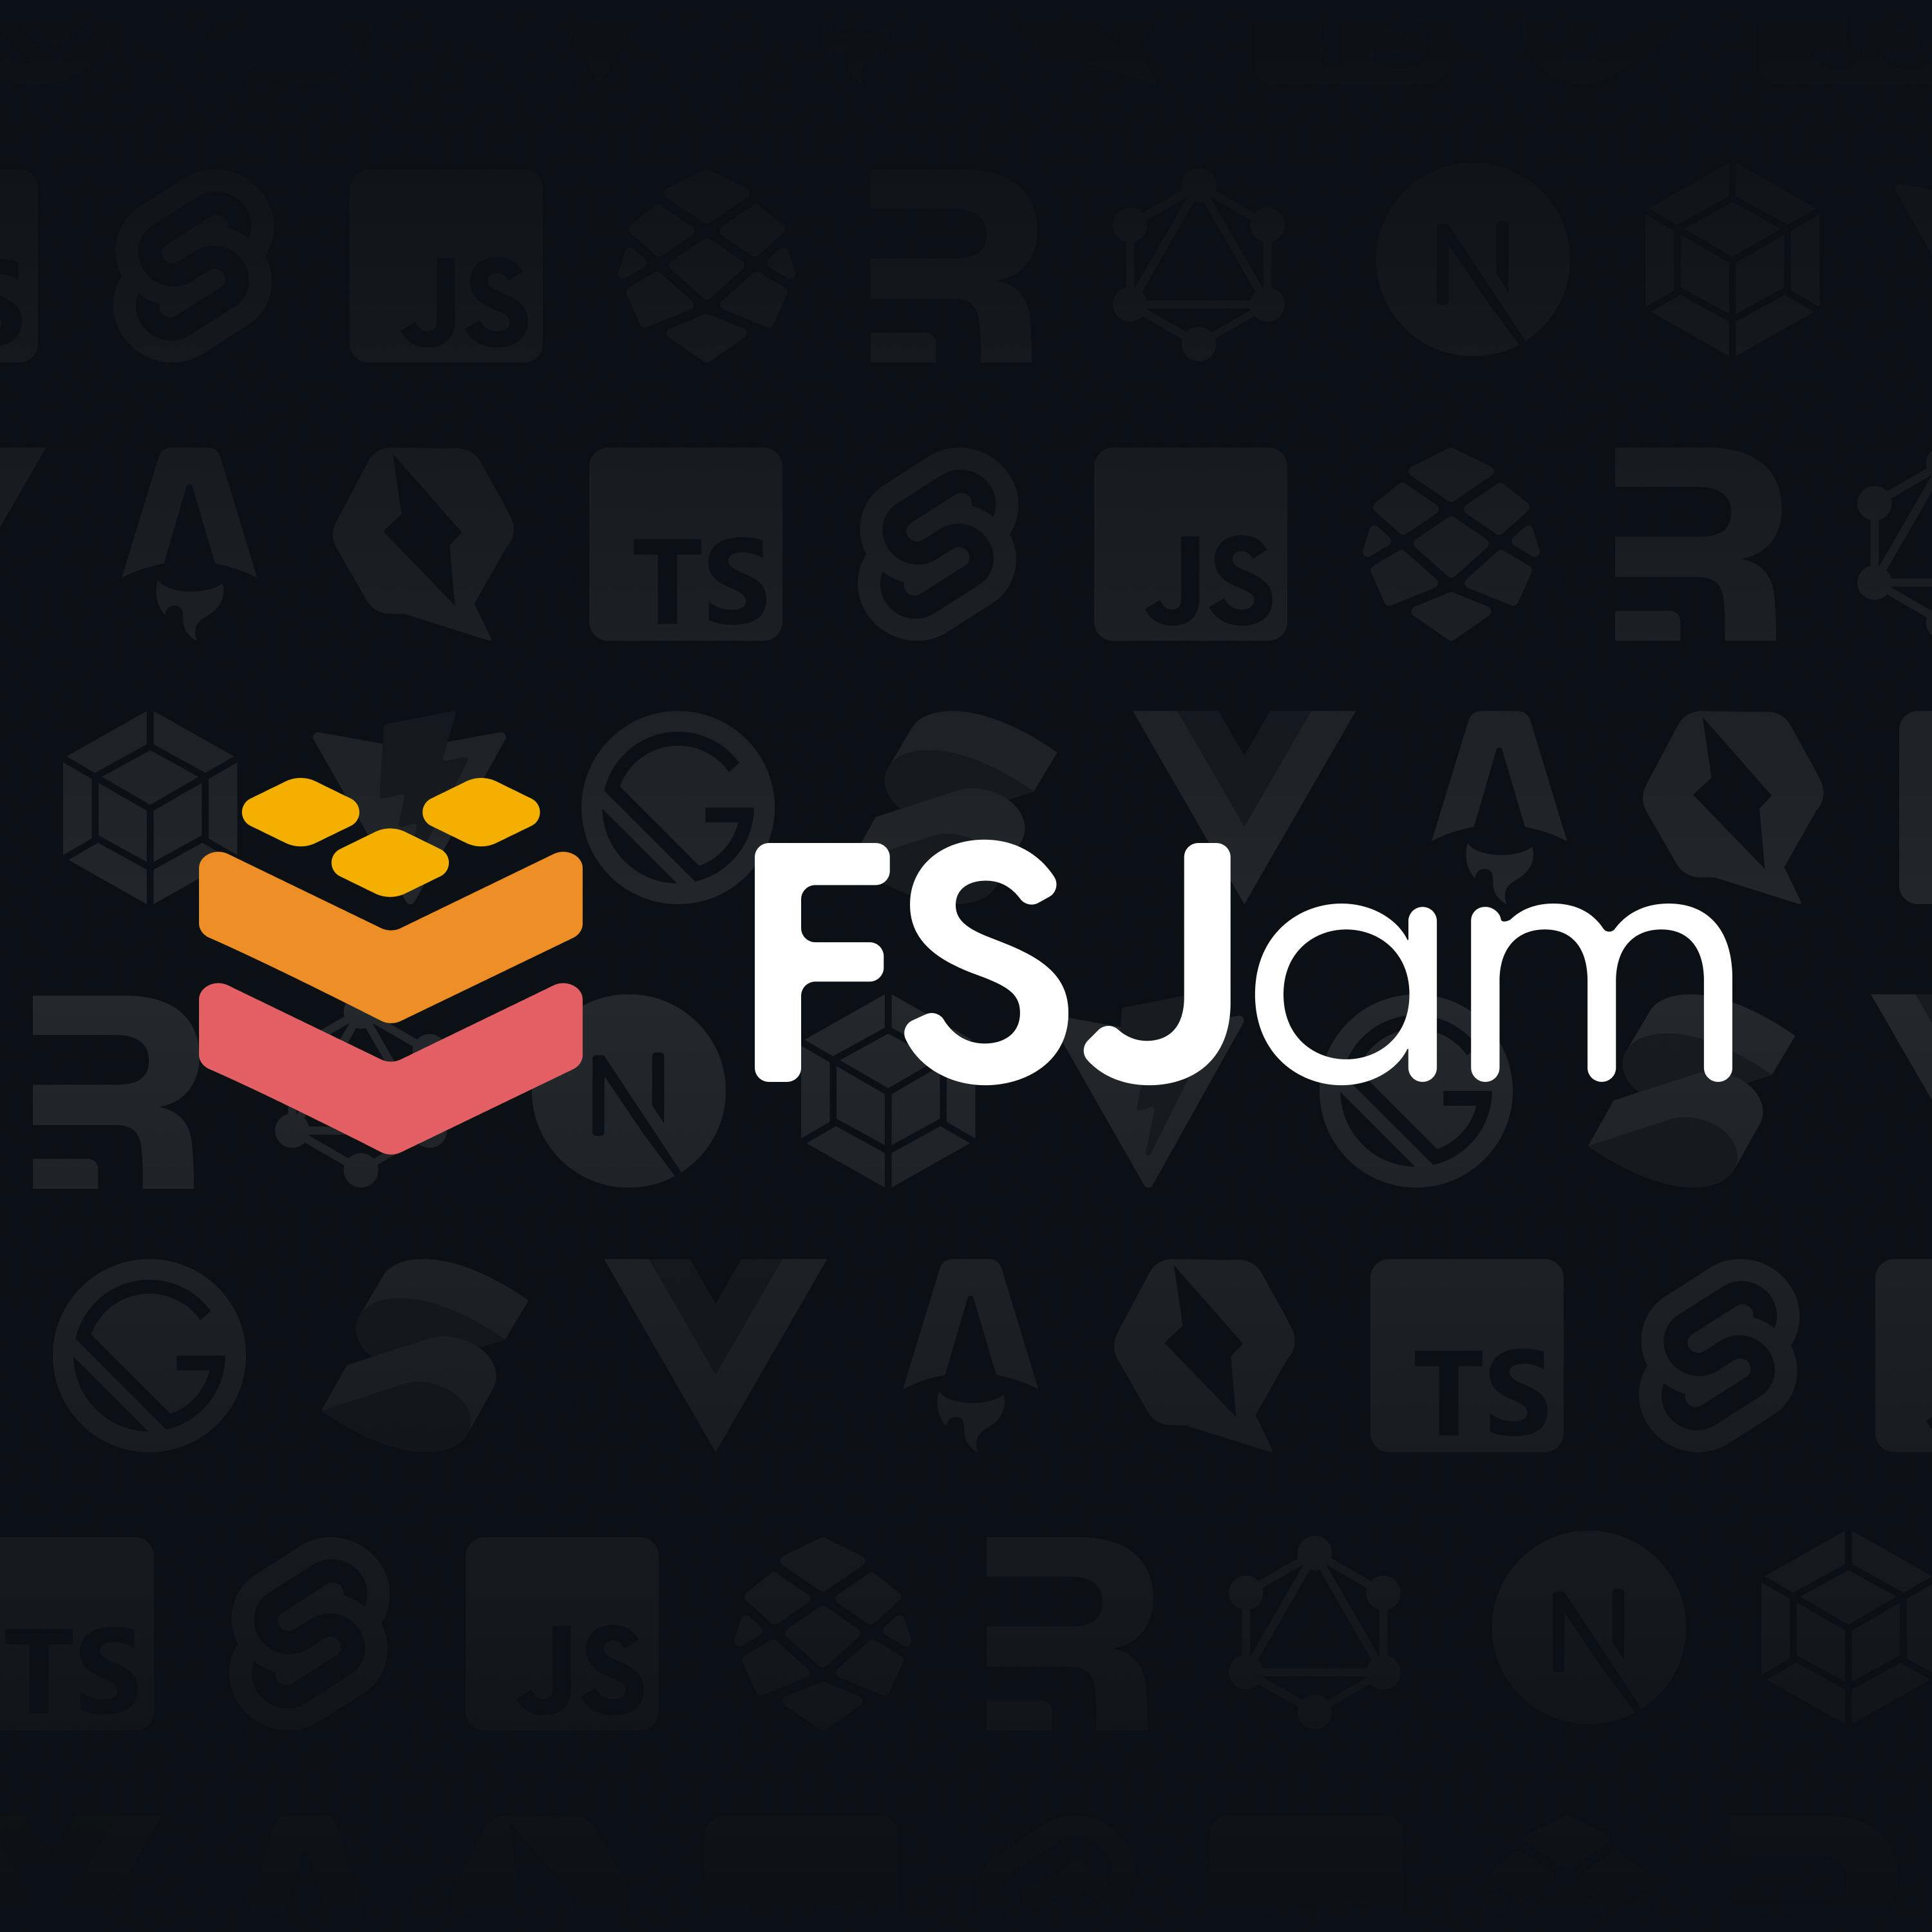 Fullstack Jamstack podcast logo